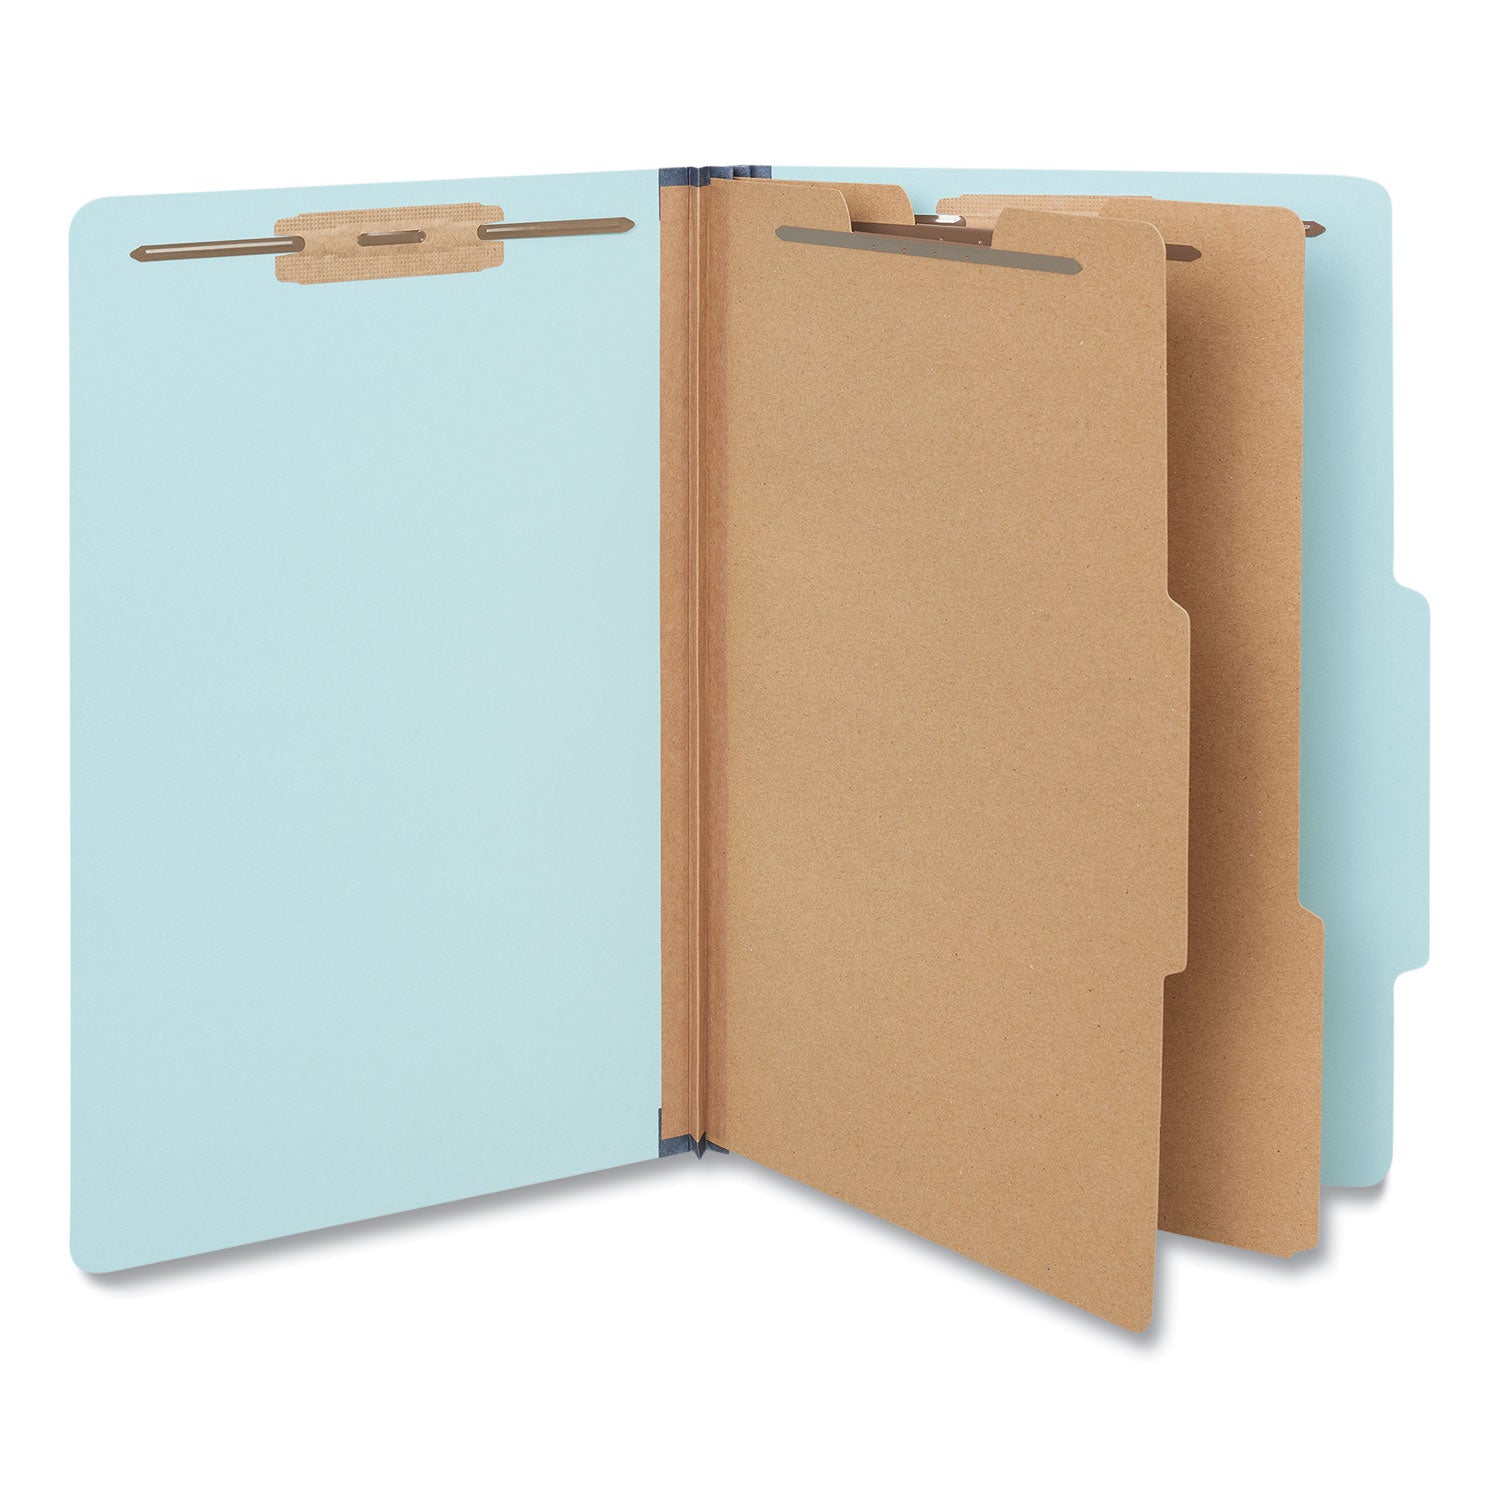 six-section-classification-folders-heavy-duty-pressboard-cover-2-dividers-6-fasteners-legal-size-light-blue-20-box_unv10406 - 1